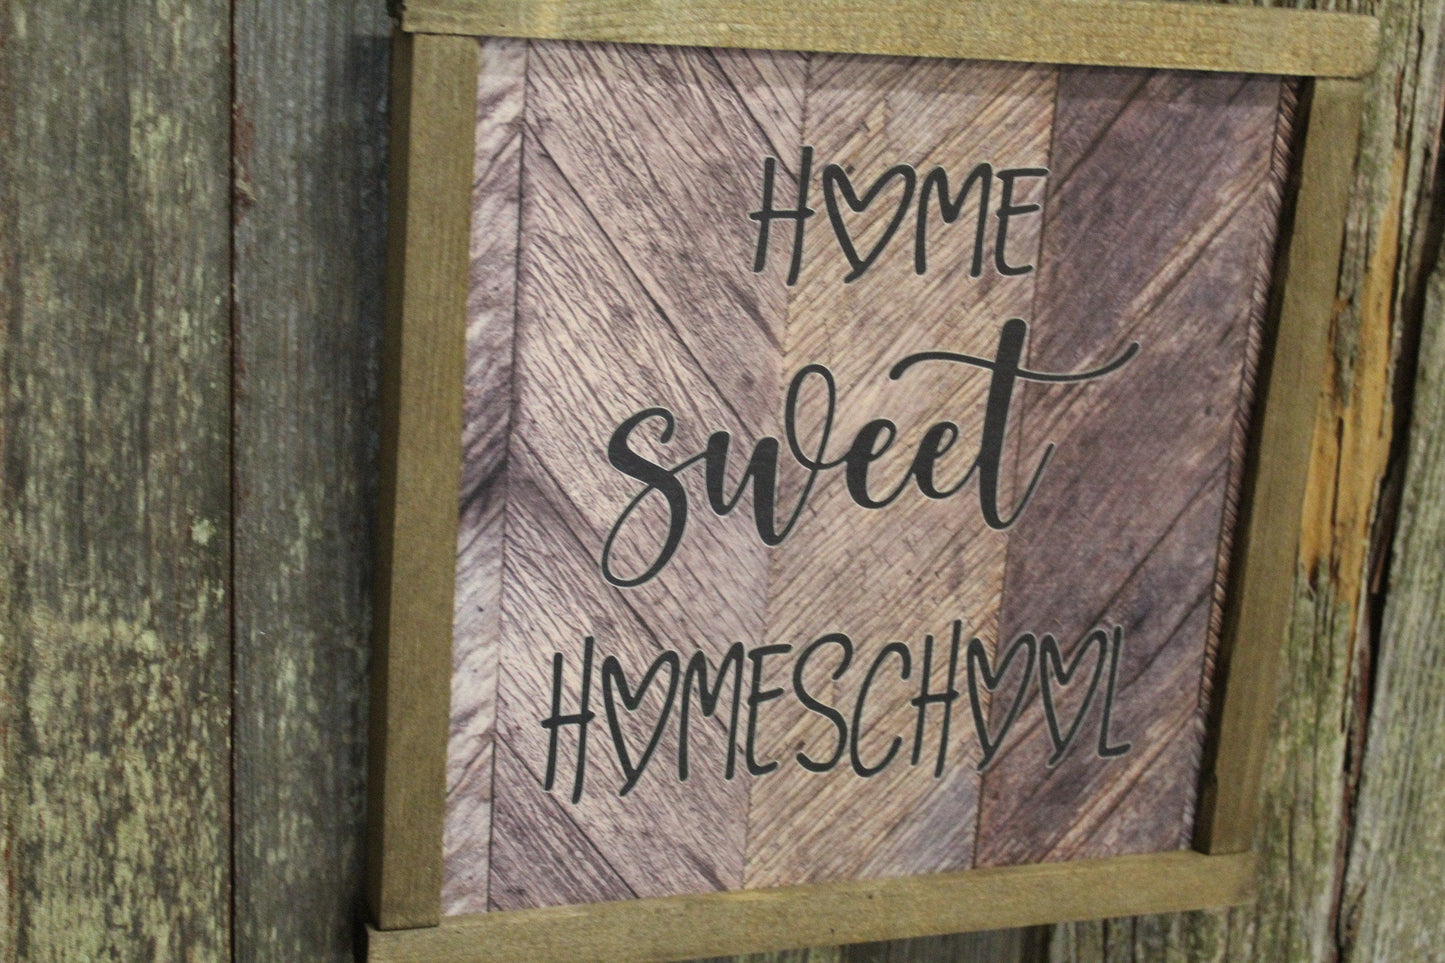 Home Sweet Homeschool Wood Sign Decor Academy Brown Framed Uv Print Wall Art Farmhouse Primitive Rustic Gift